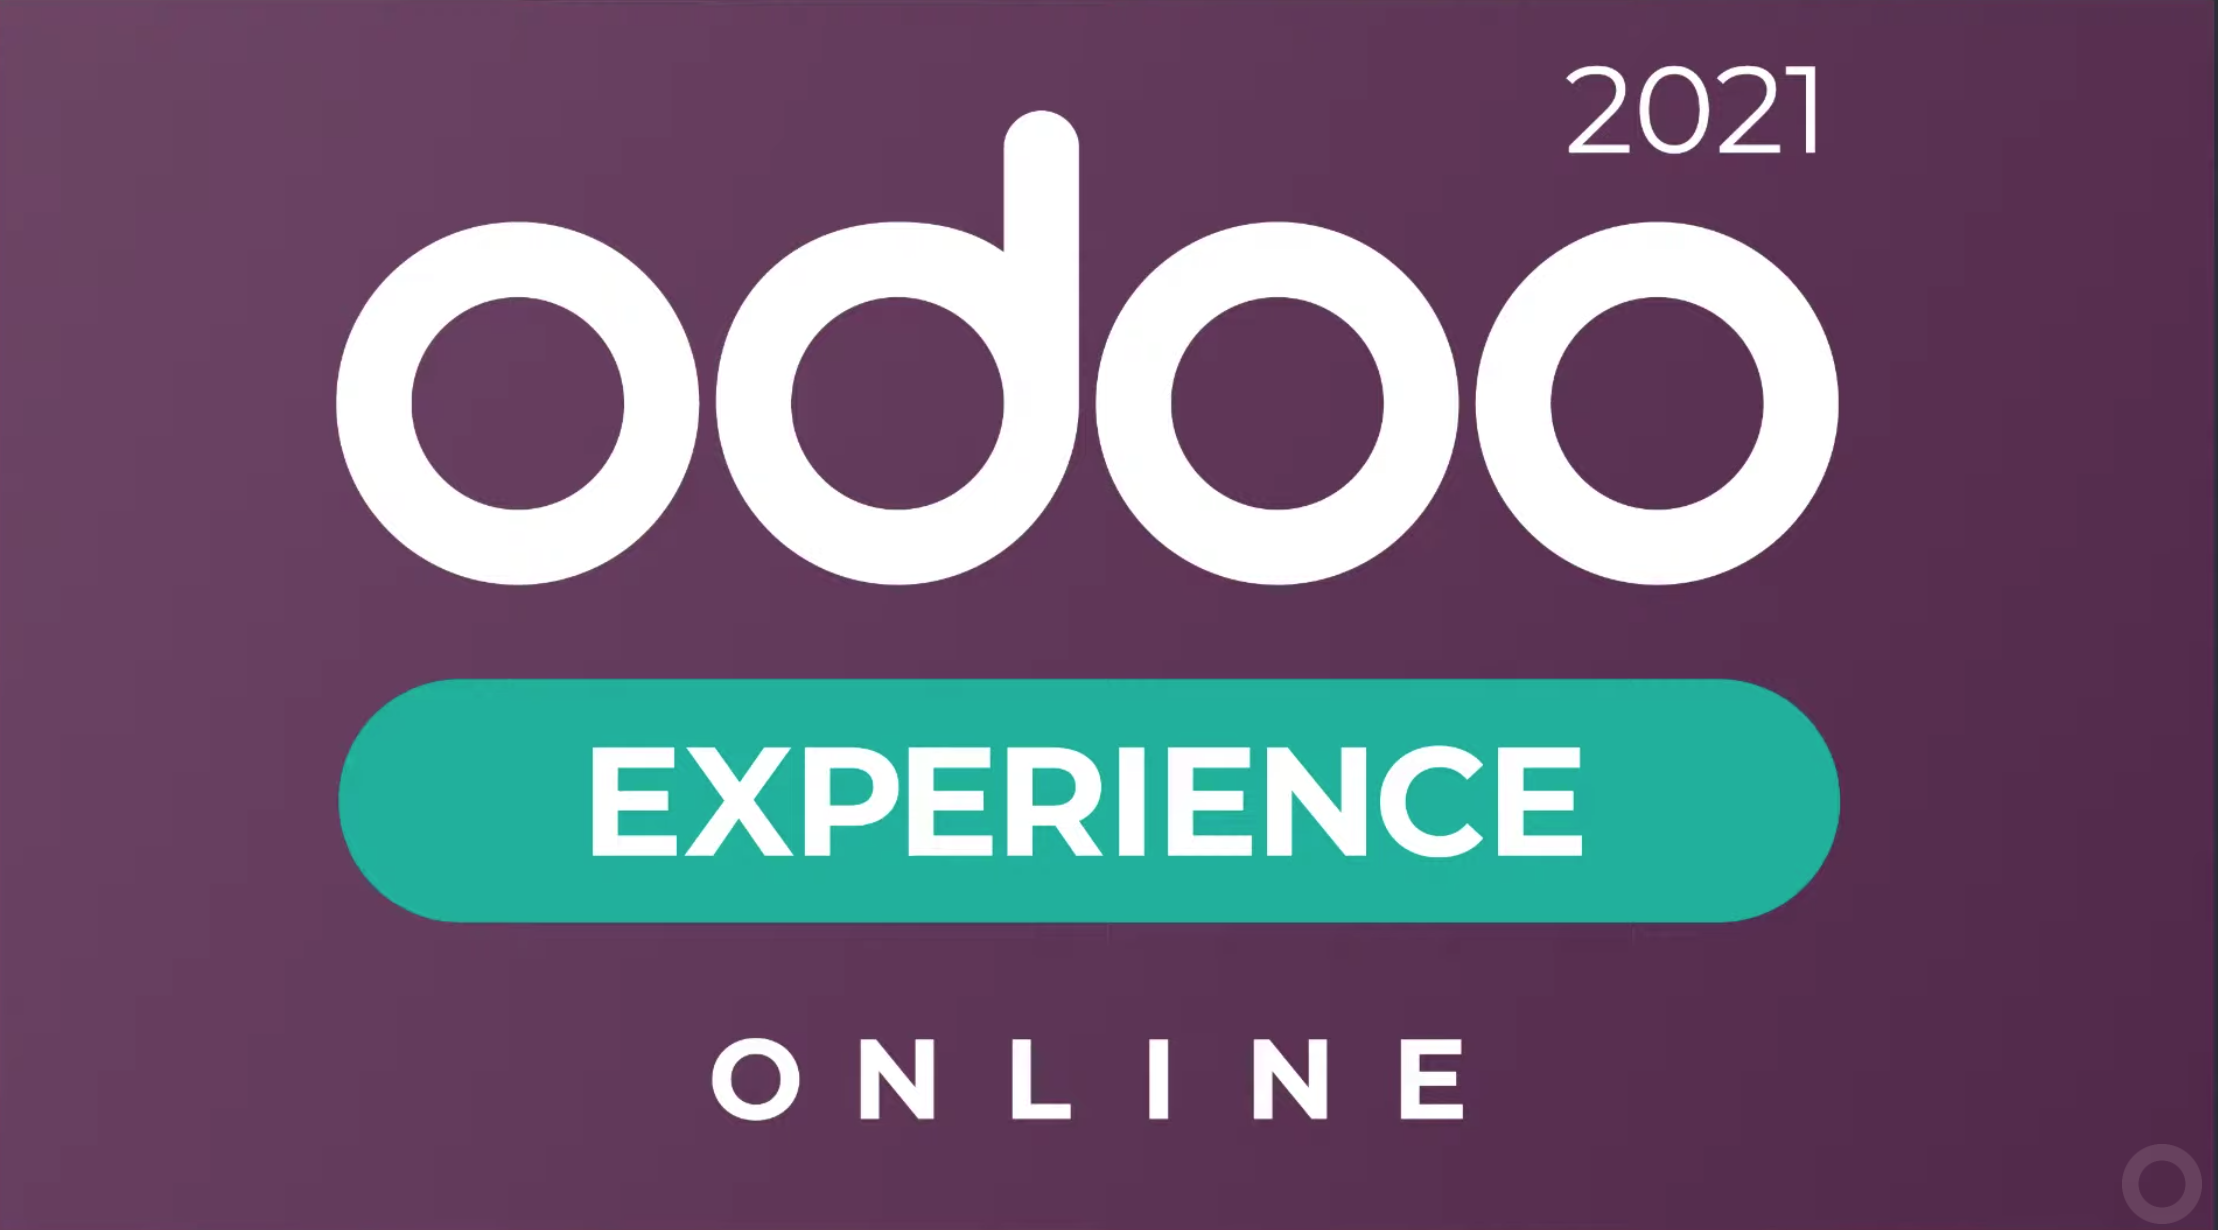 Odoo Experience 2021